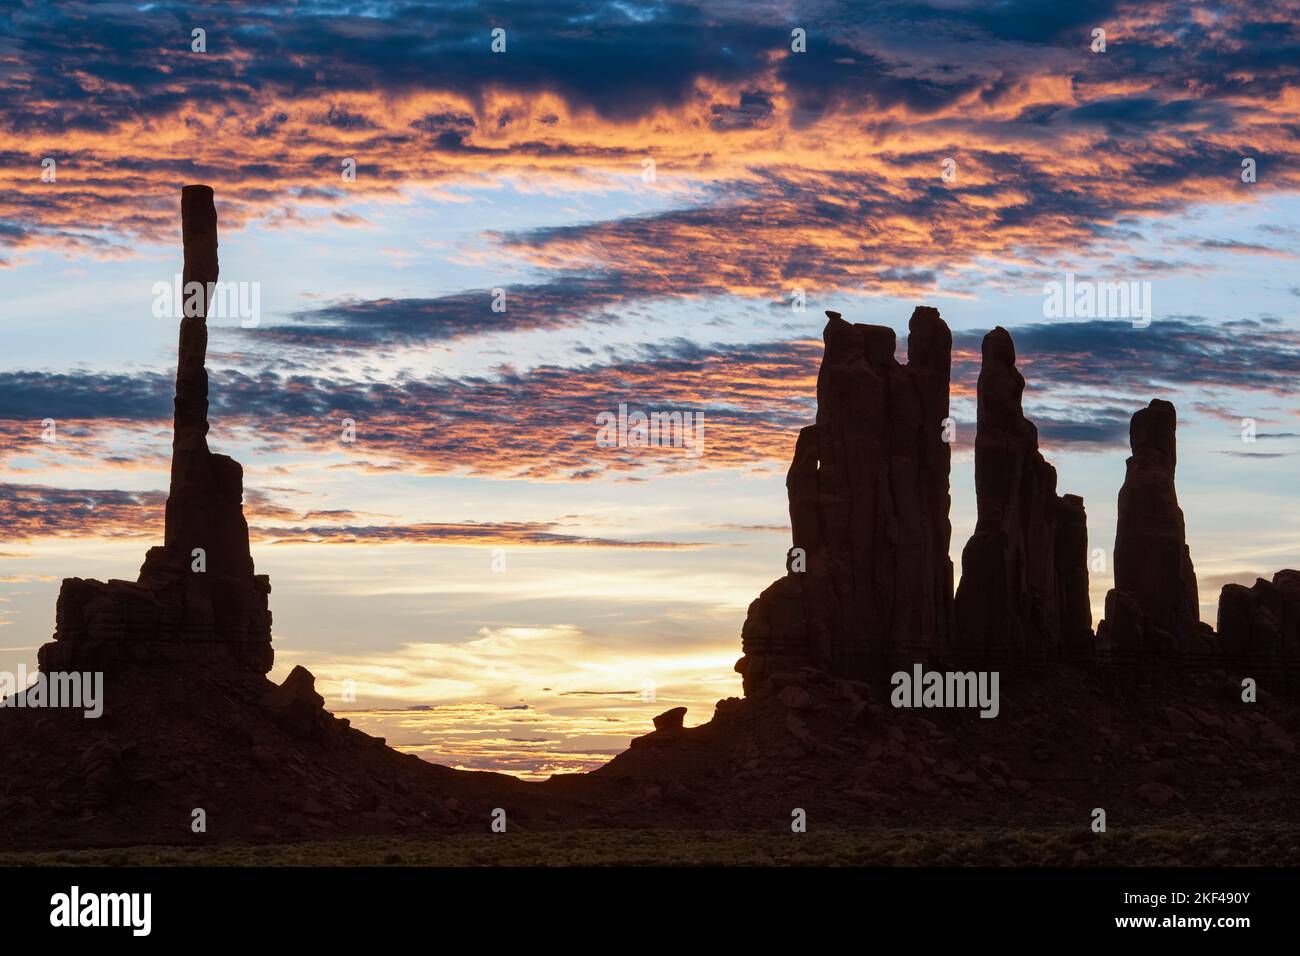 Sonnenaufgang mit Totem Pole im Gegenlicht, Monument Valley, Arizona, USA, Nordamerika Foto Stock